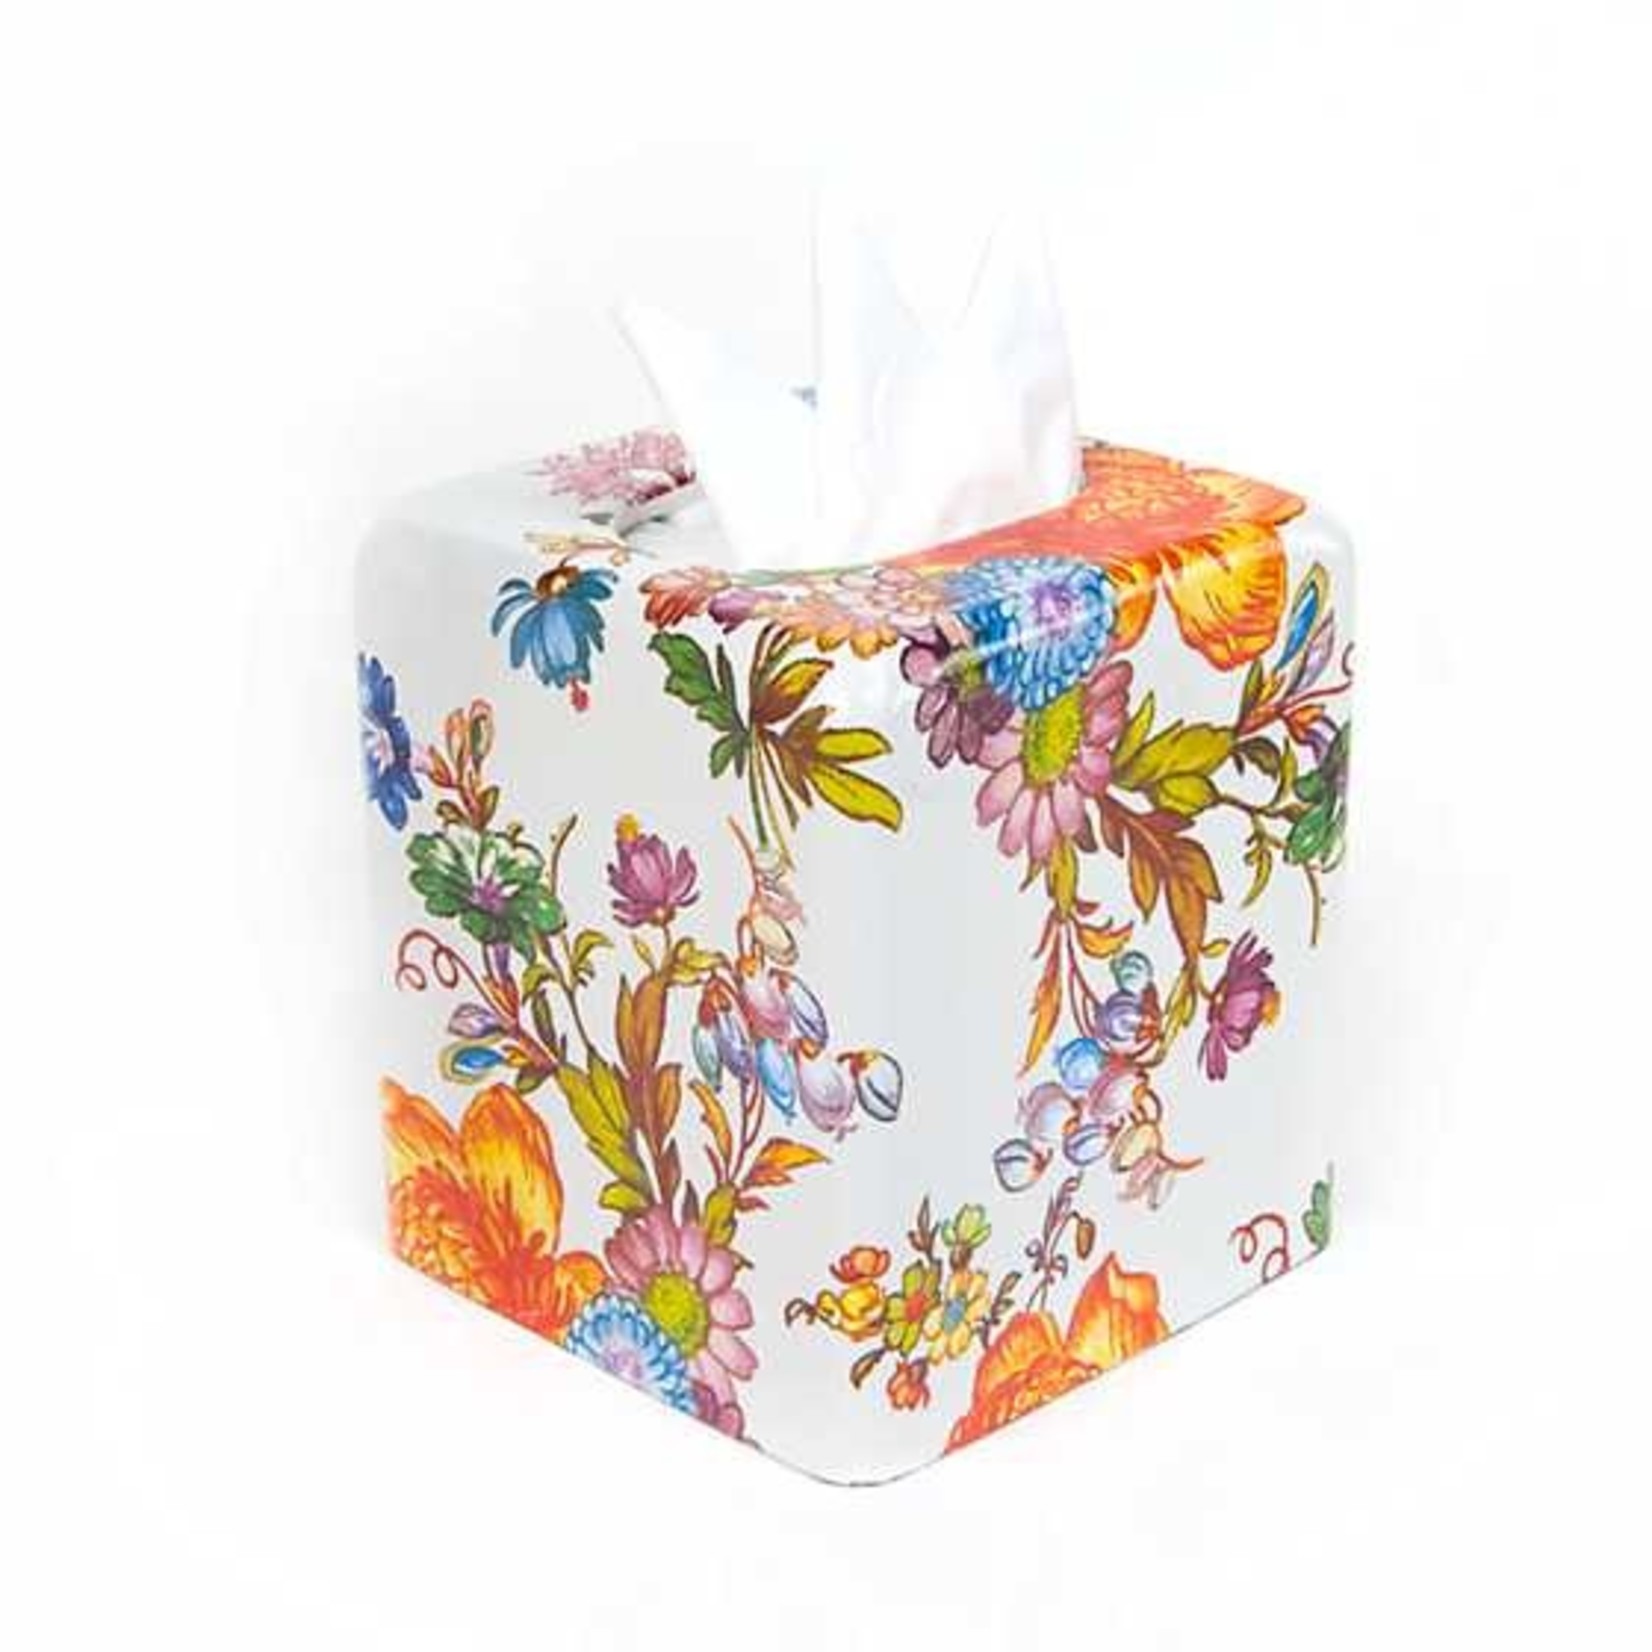 MacKenzie Childs flower market boutique tissue box cover - white